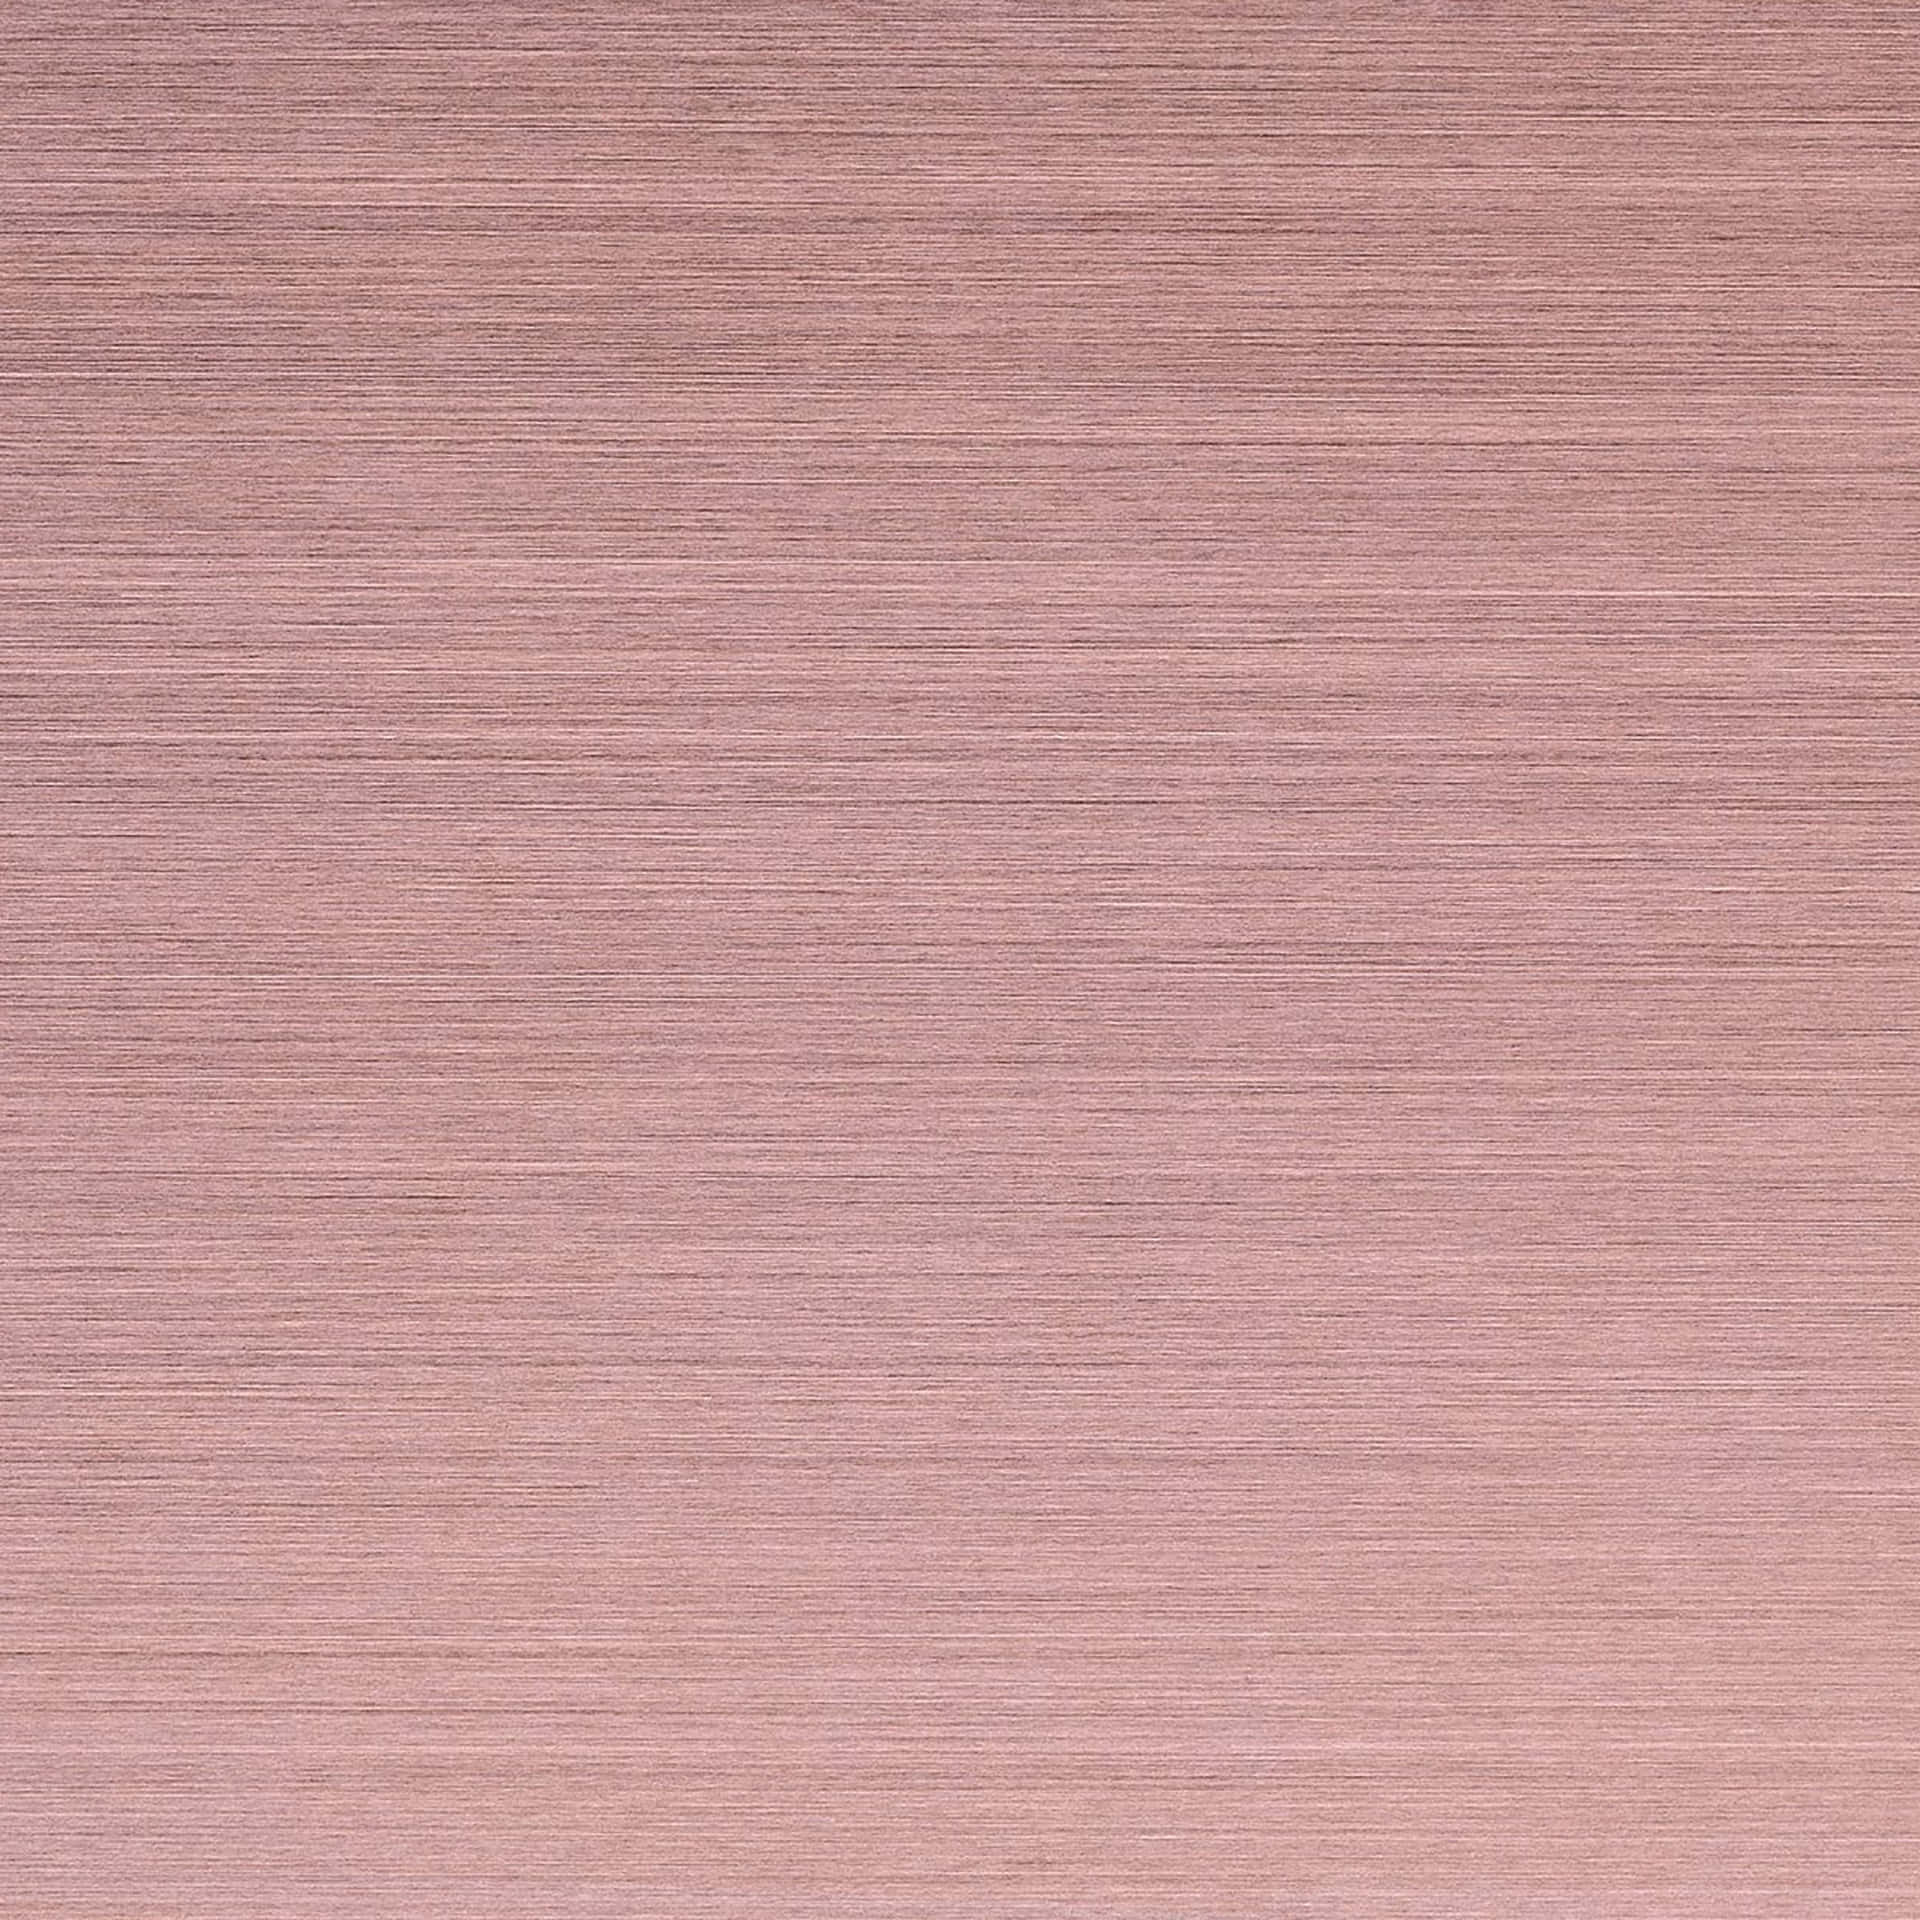 Unipad De Apple En Rosa Hermoso. Fondo de pantalla